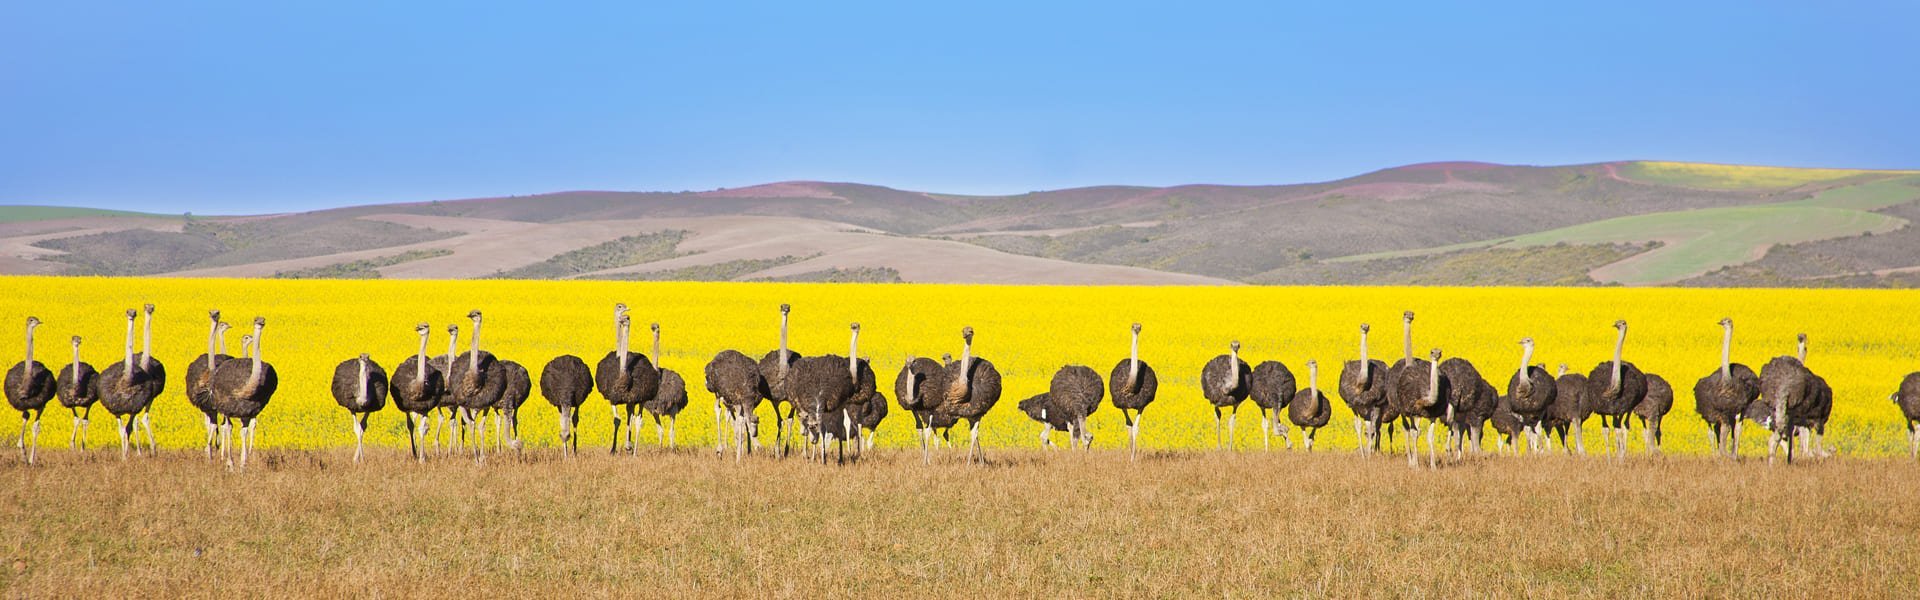 Struisvogels in Oudtshoorn, Zuid-Afrika